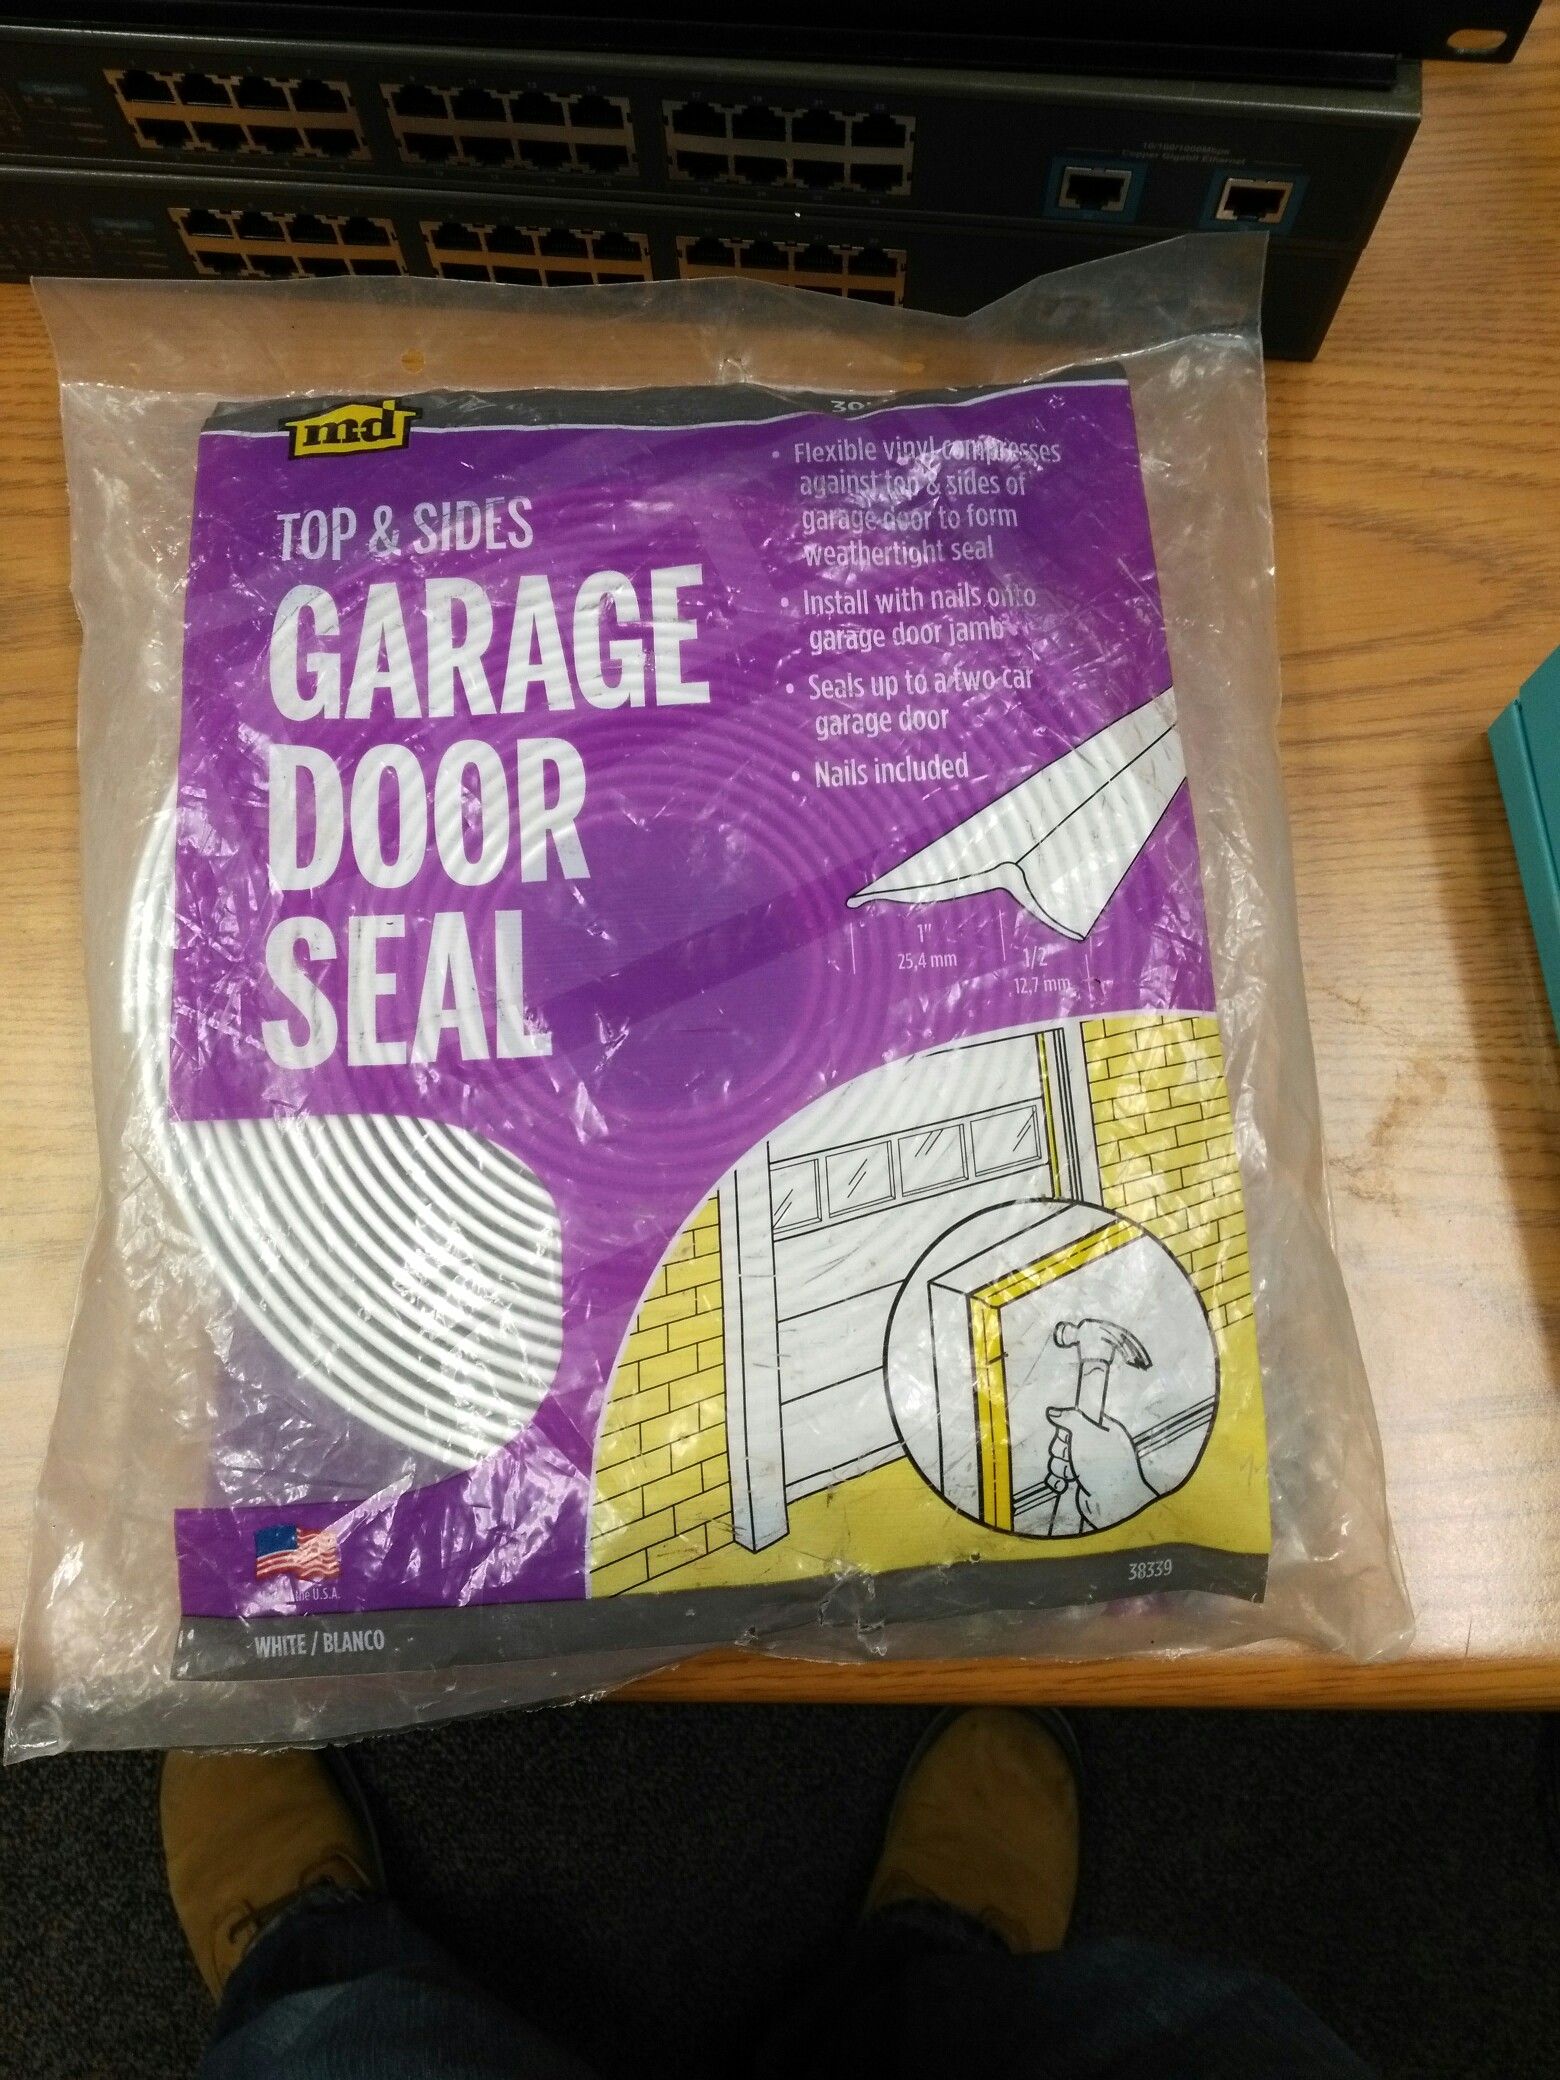 MD Garage door seal Brand New top & sides